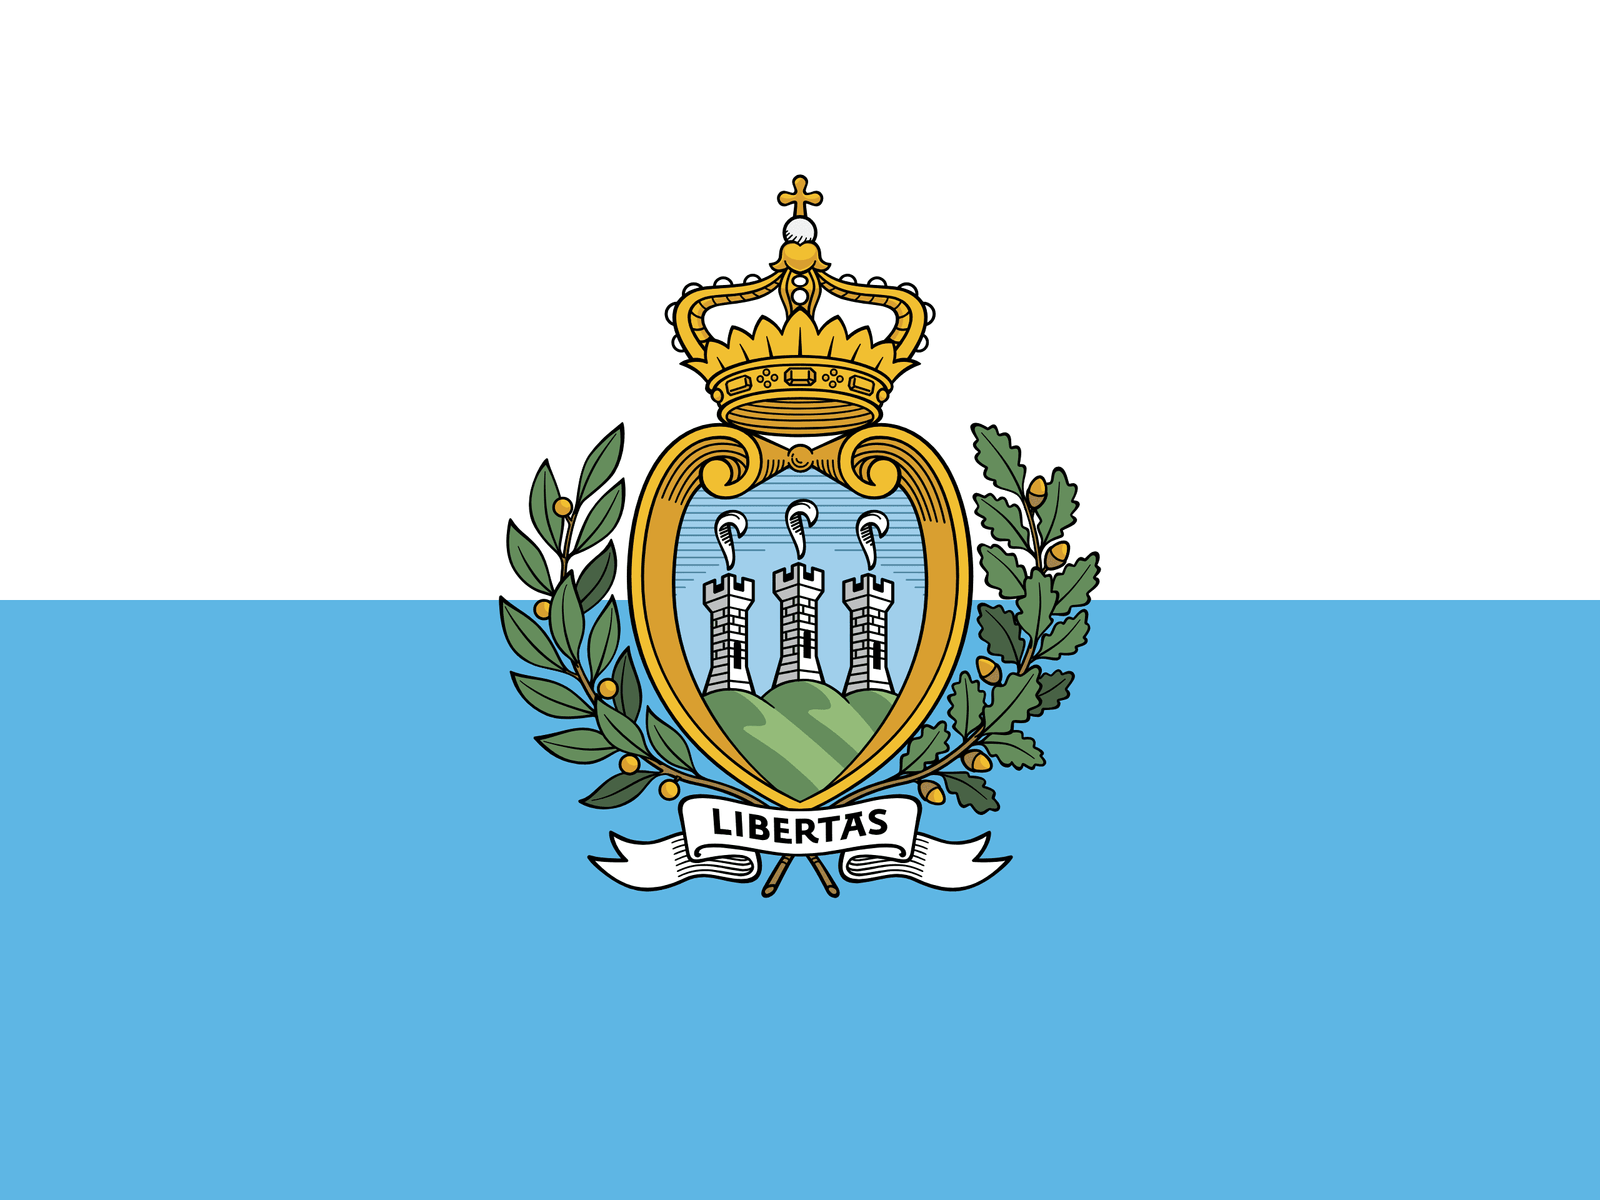 San Marino - Powered by Eduhyme.com